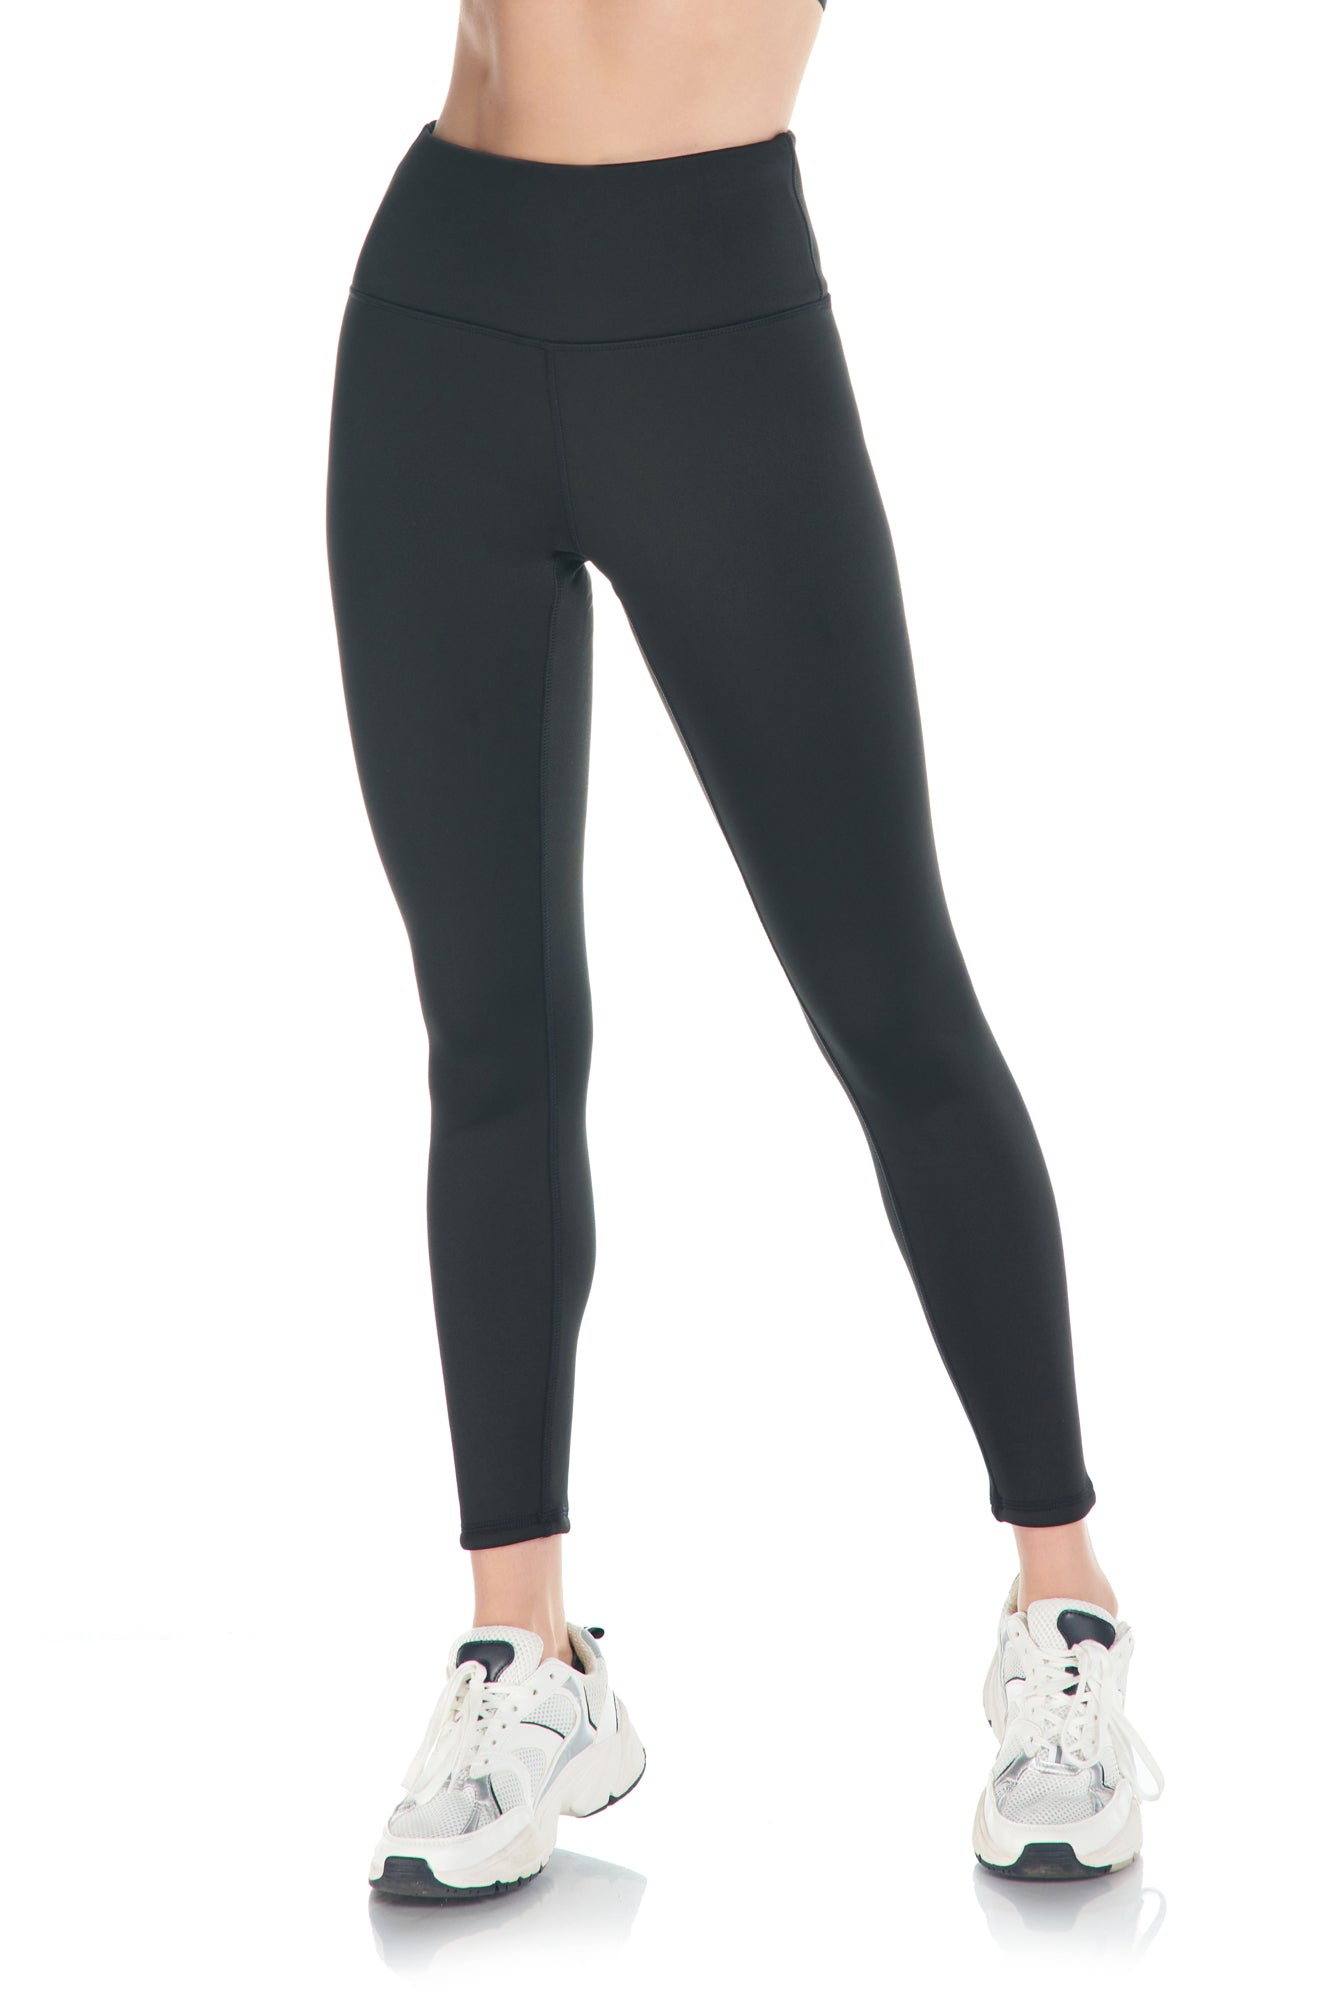 ZERDOCEAN Women's Plus Size High Waist Fleece Lined Leggings Winter Thermal  Workout Yoga Pants